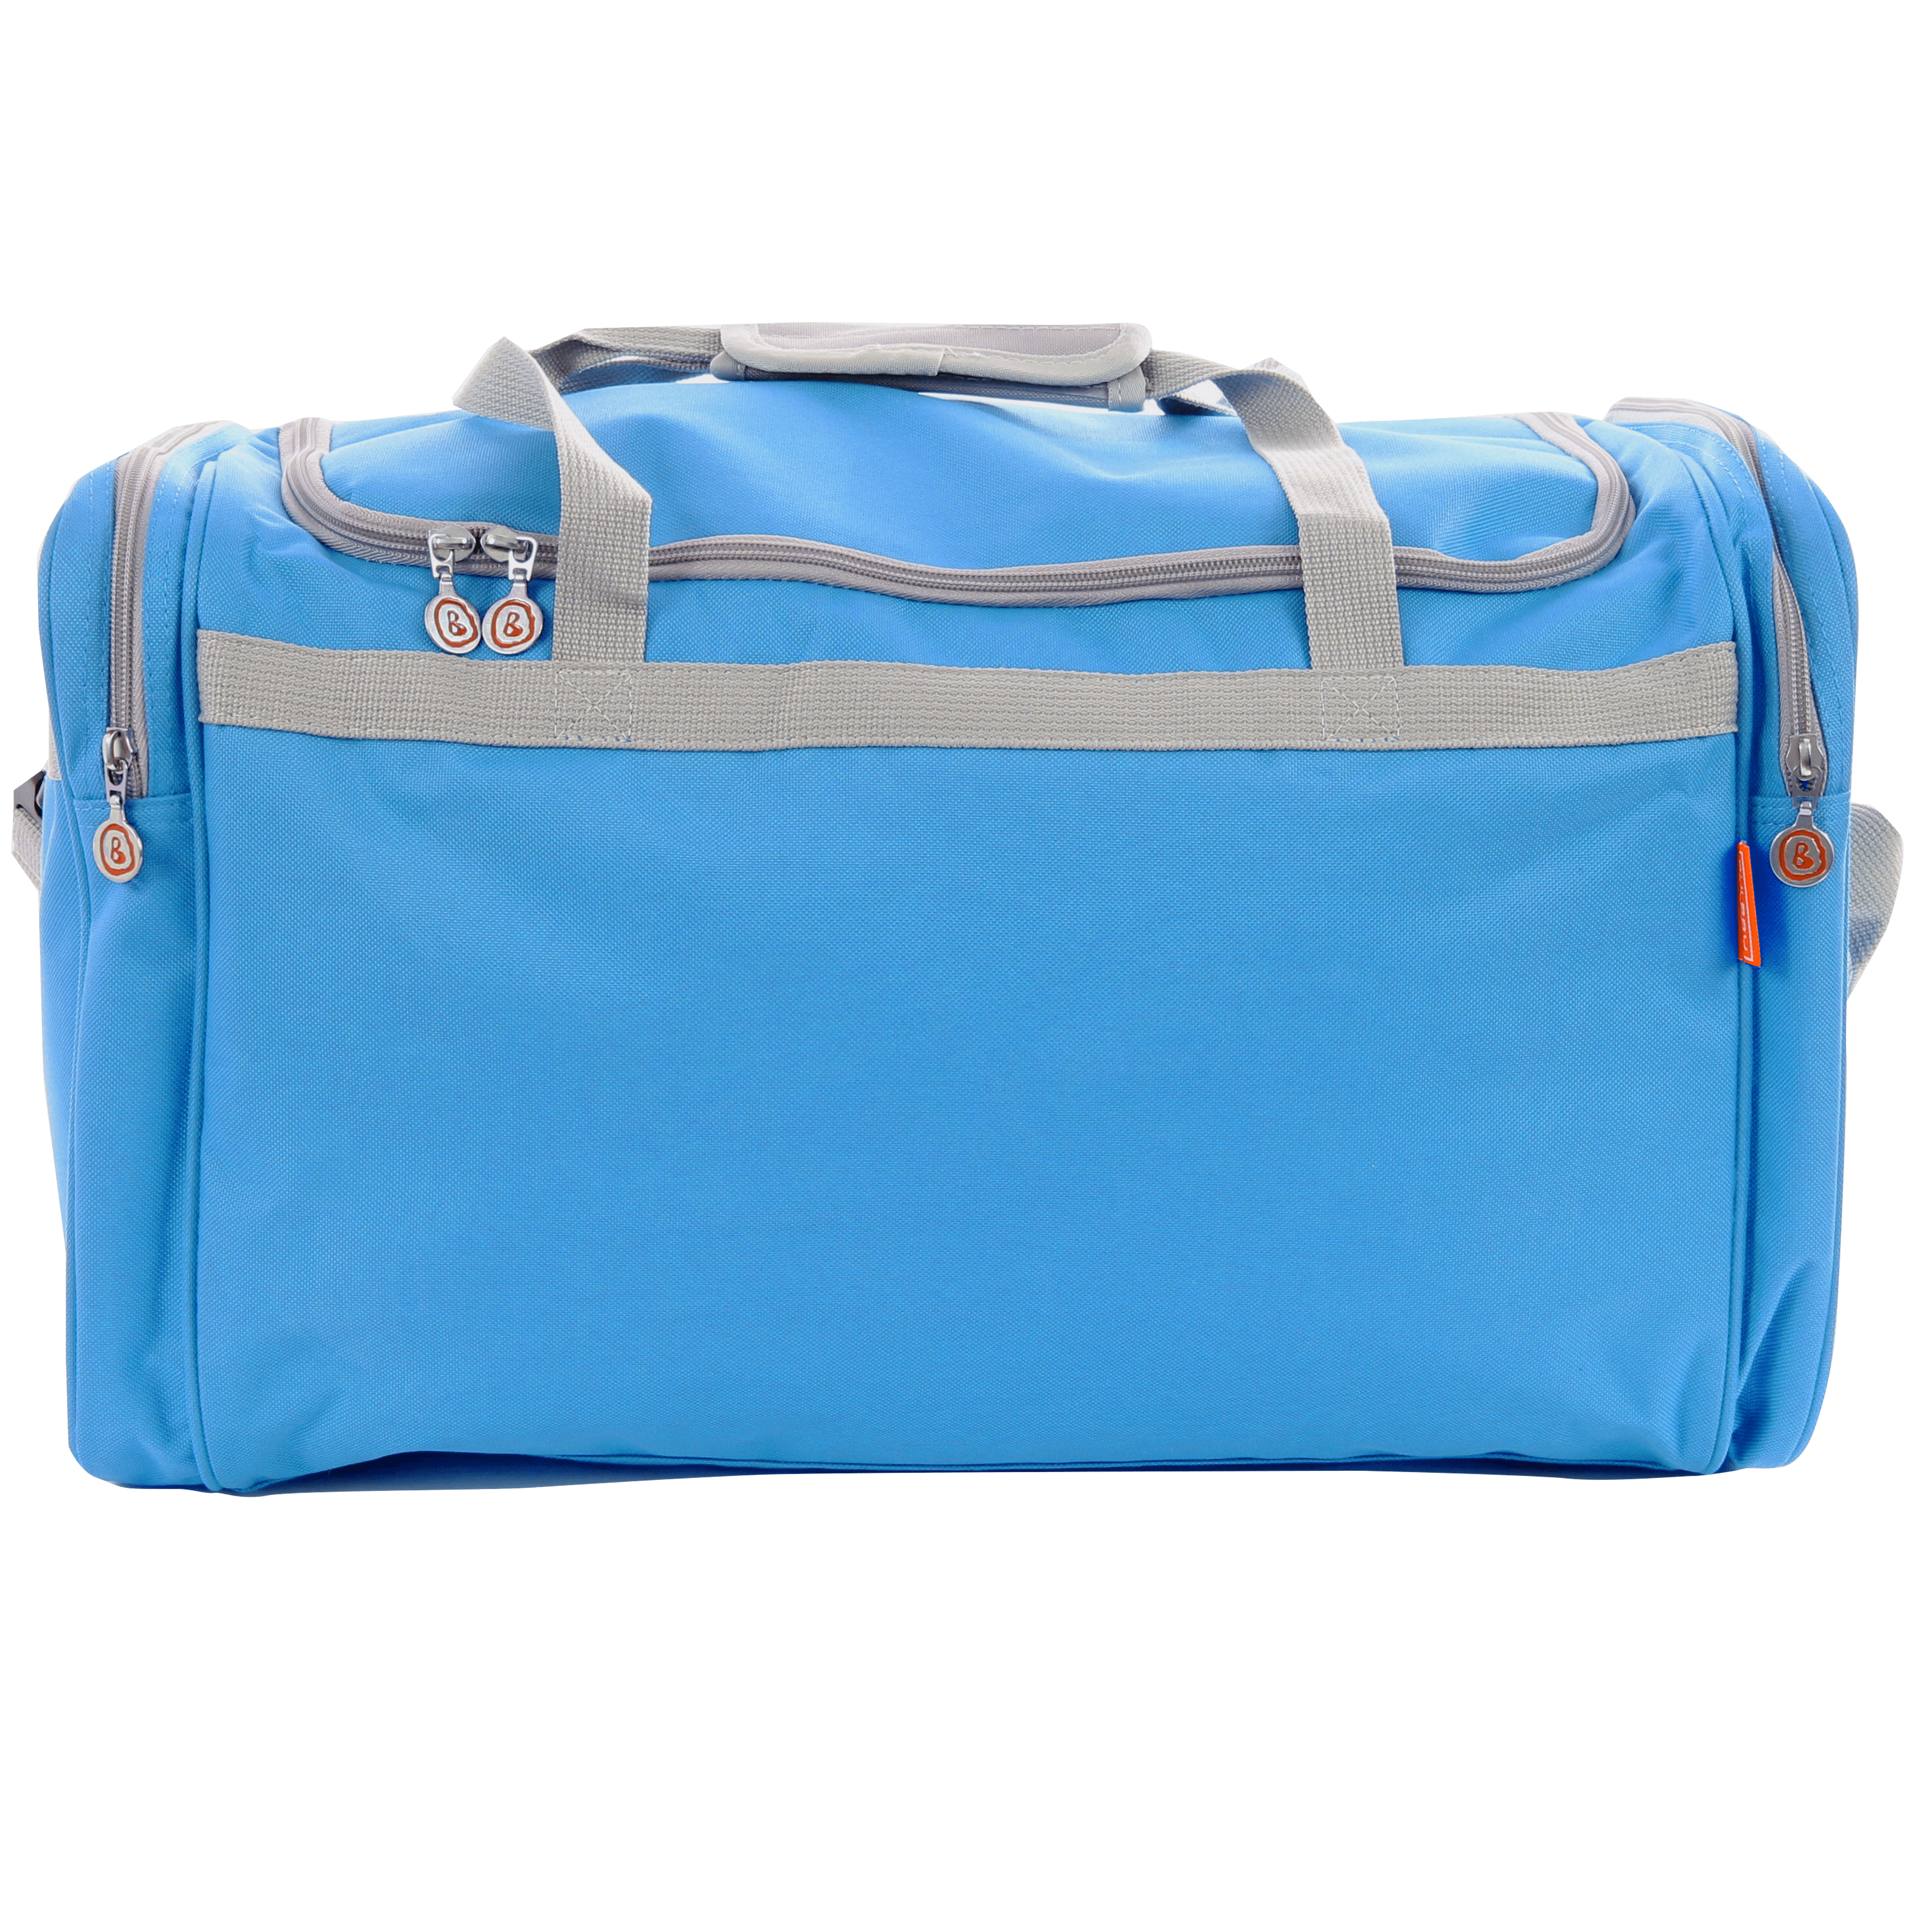 Sports bag blue